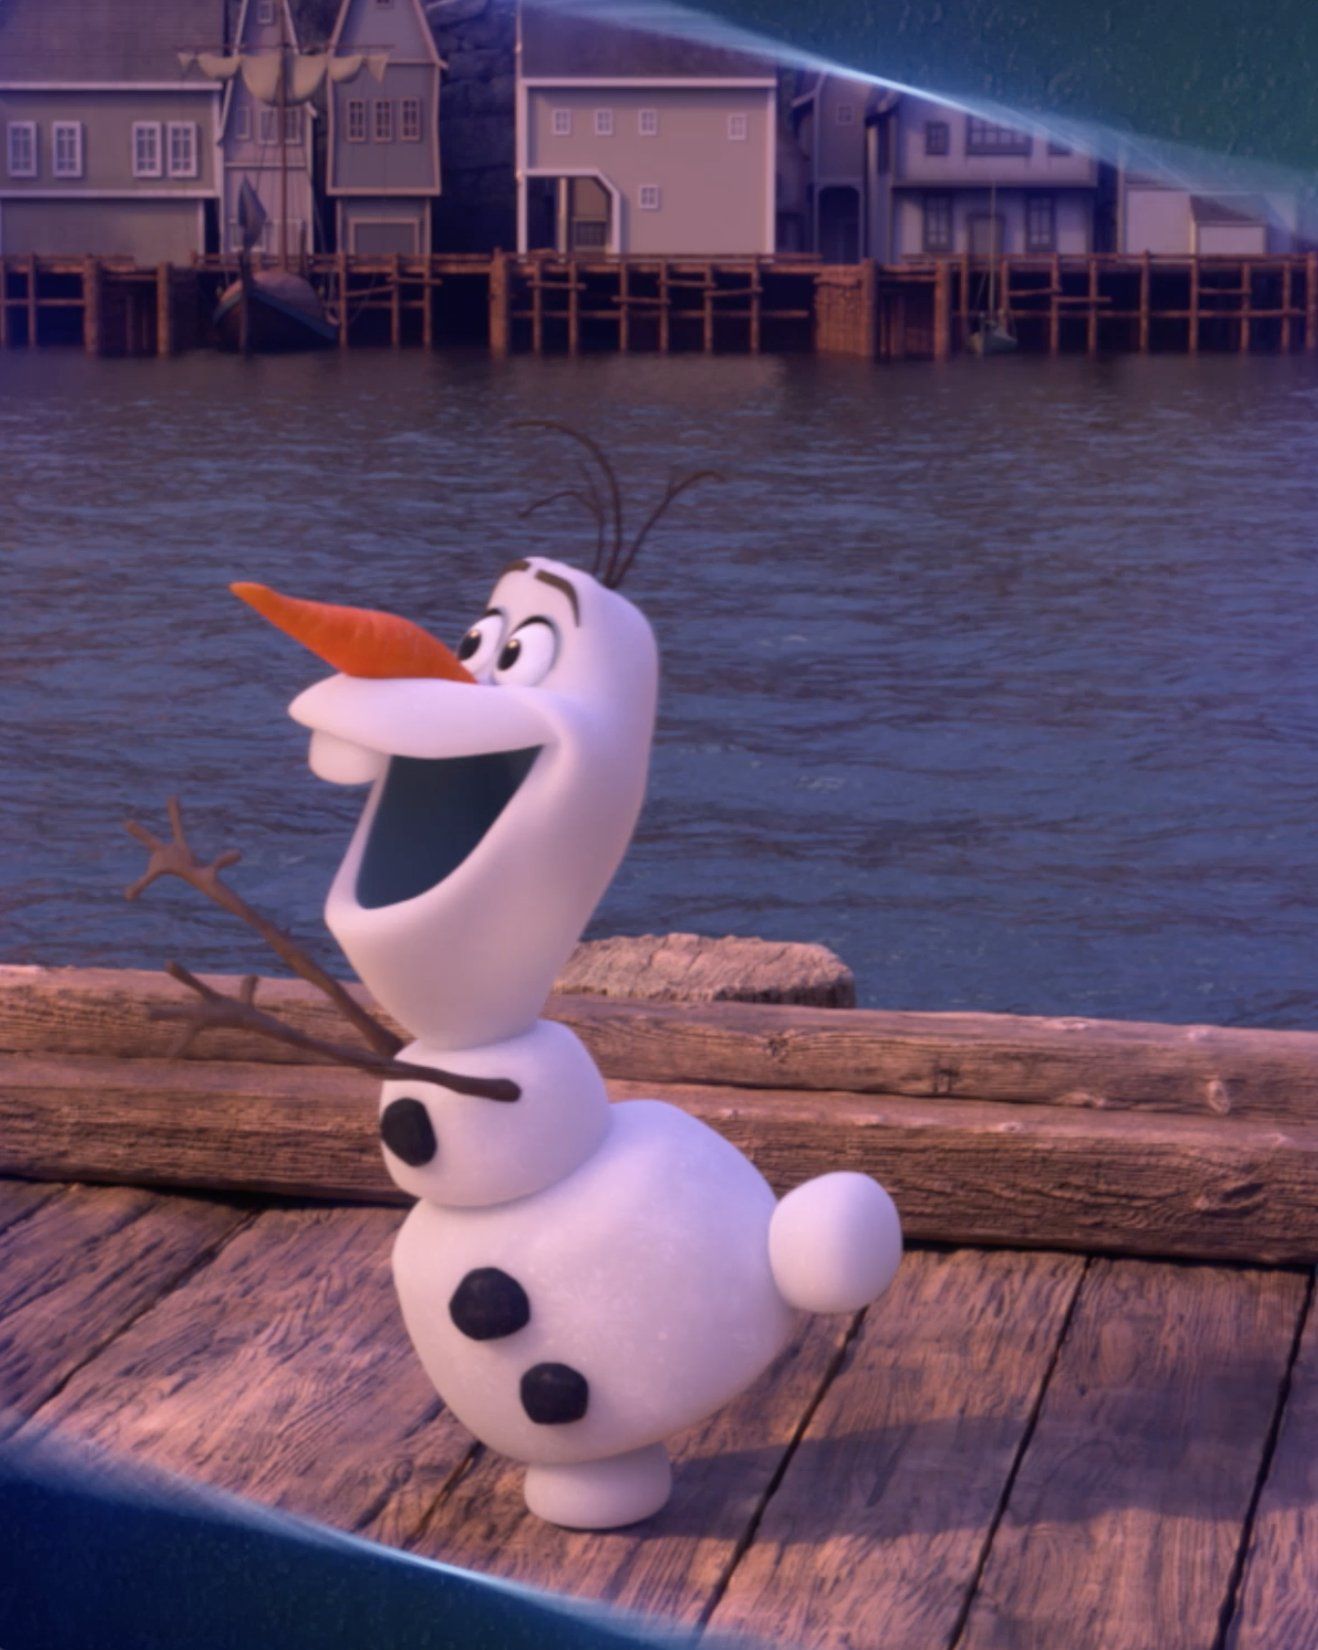 Disney's Frozen adventure awaits. Get your tickets for #Frozen2 now